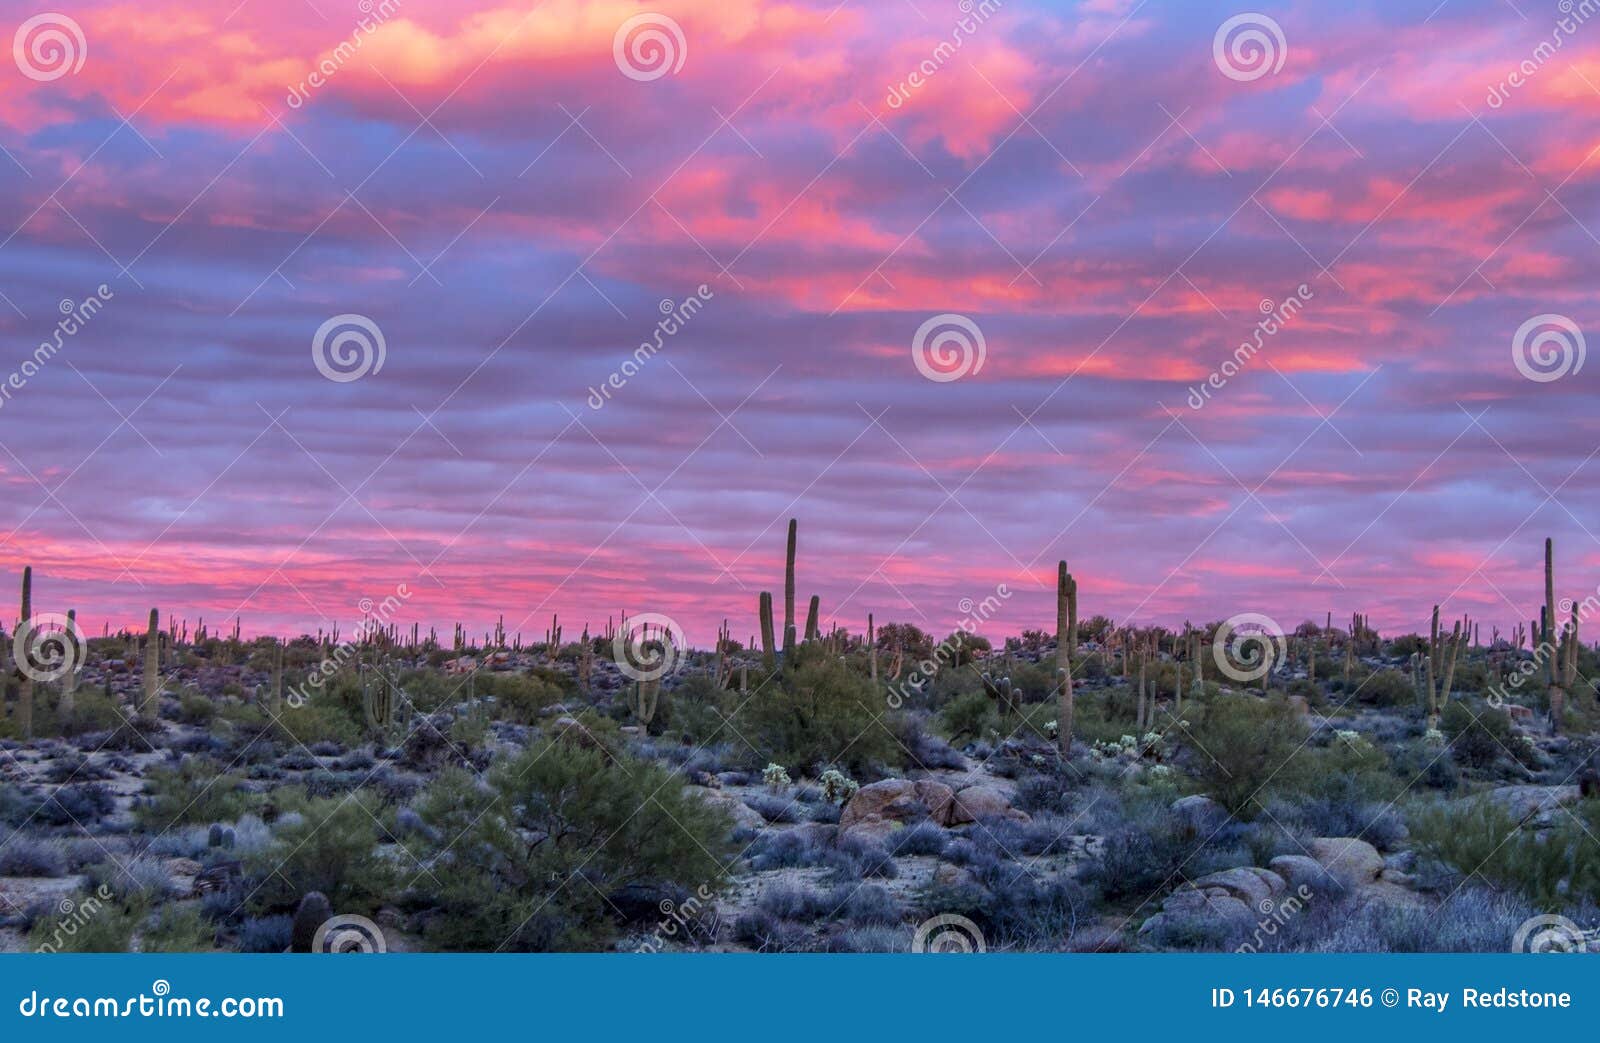 stunning sunset with saguaro cactus near browns ranch trailhead in scottsdale, arizona